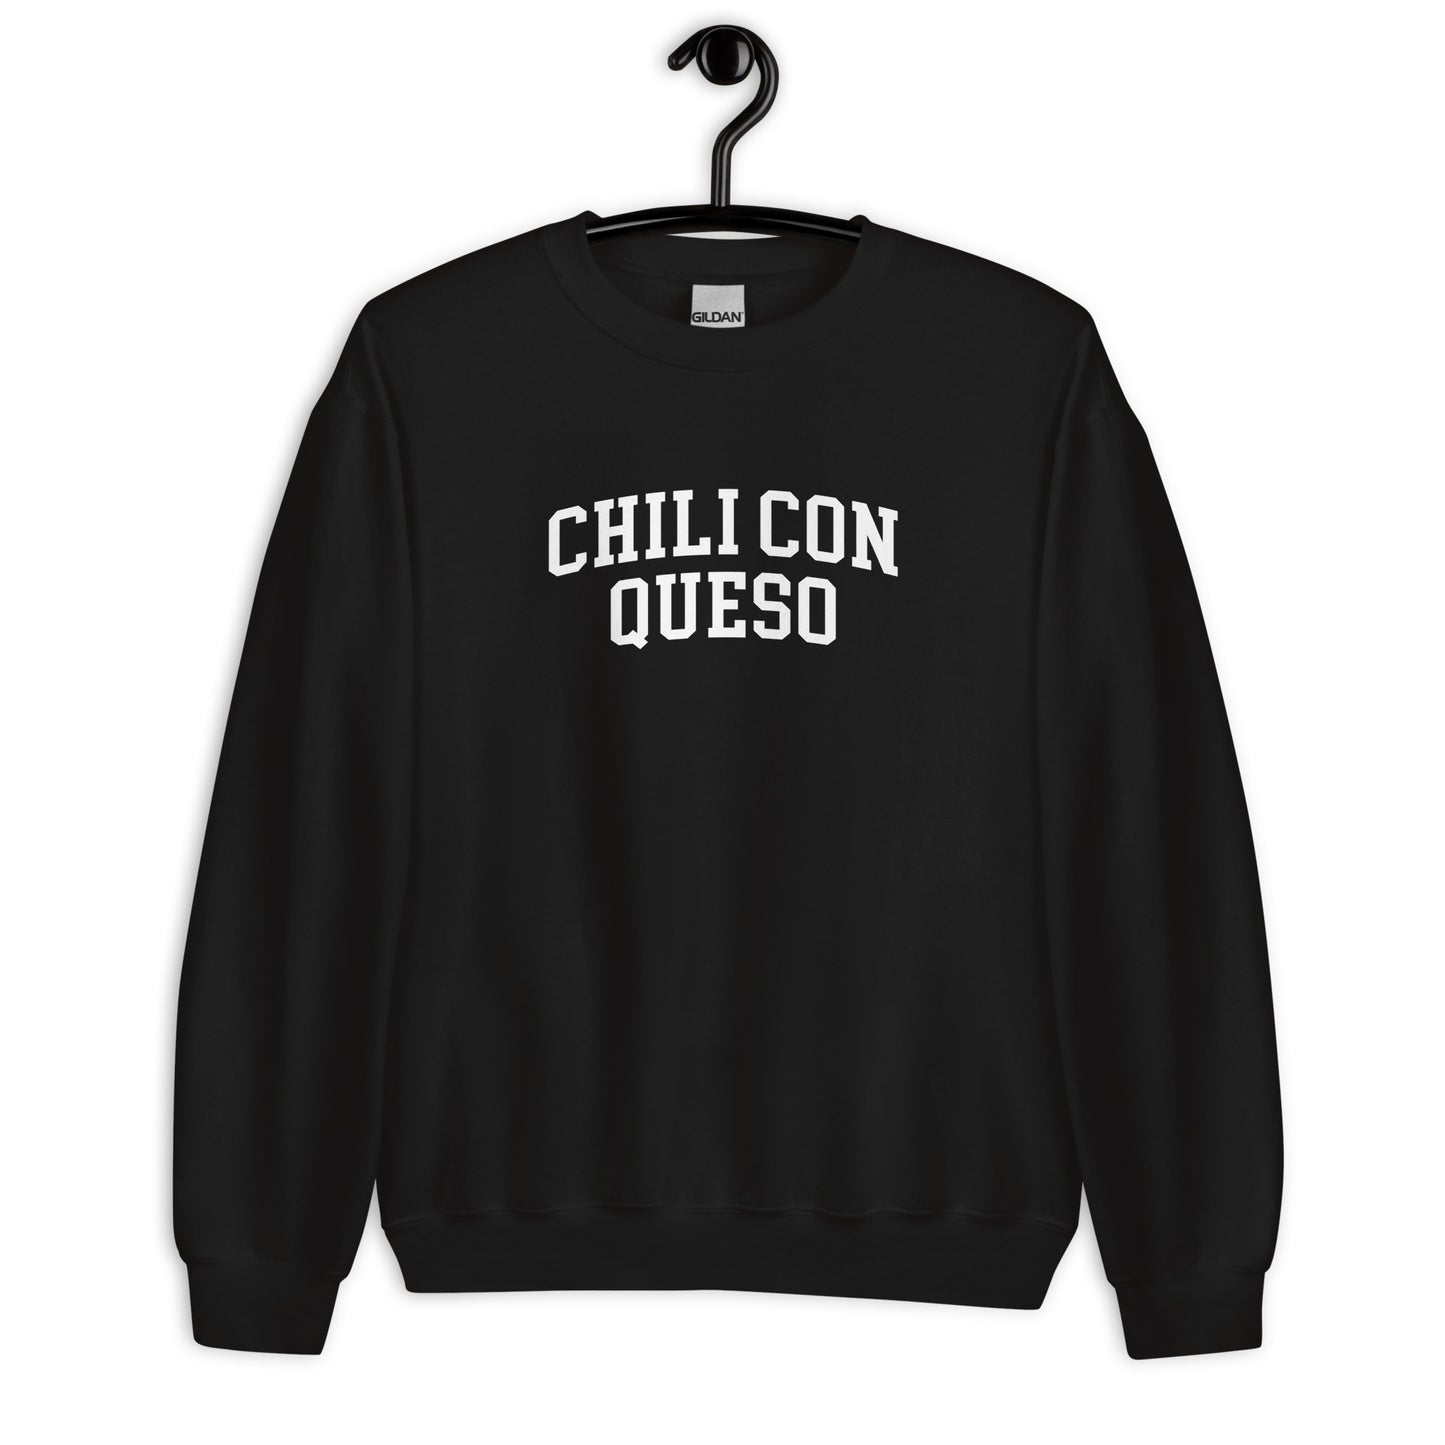 Chili Con Queso Sweatshirt - Arched Font